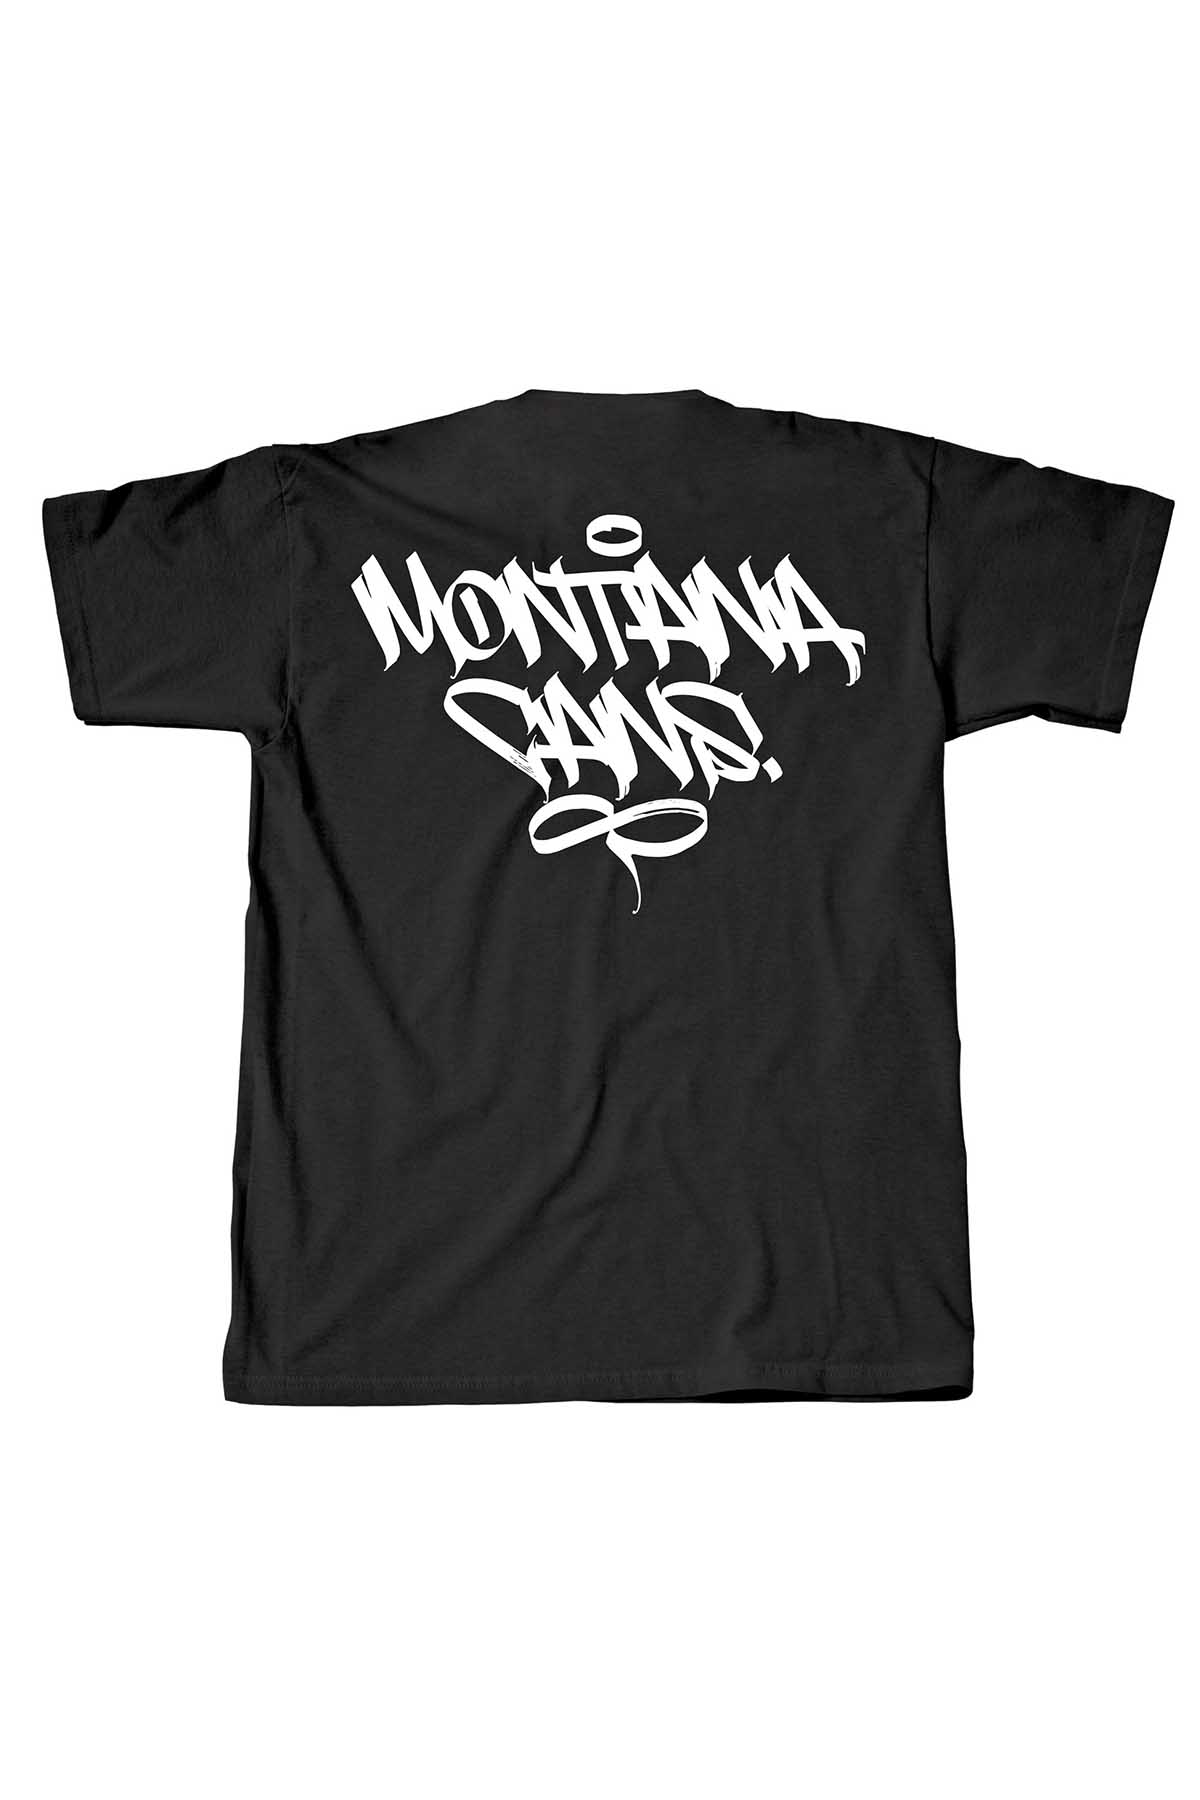 Montana MC TAG Black T-Shirt by Sicoer